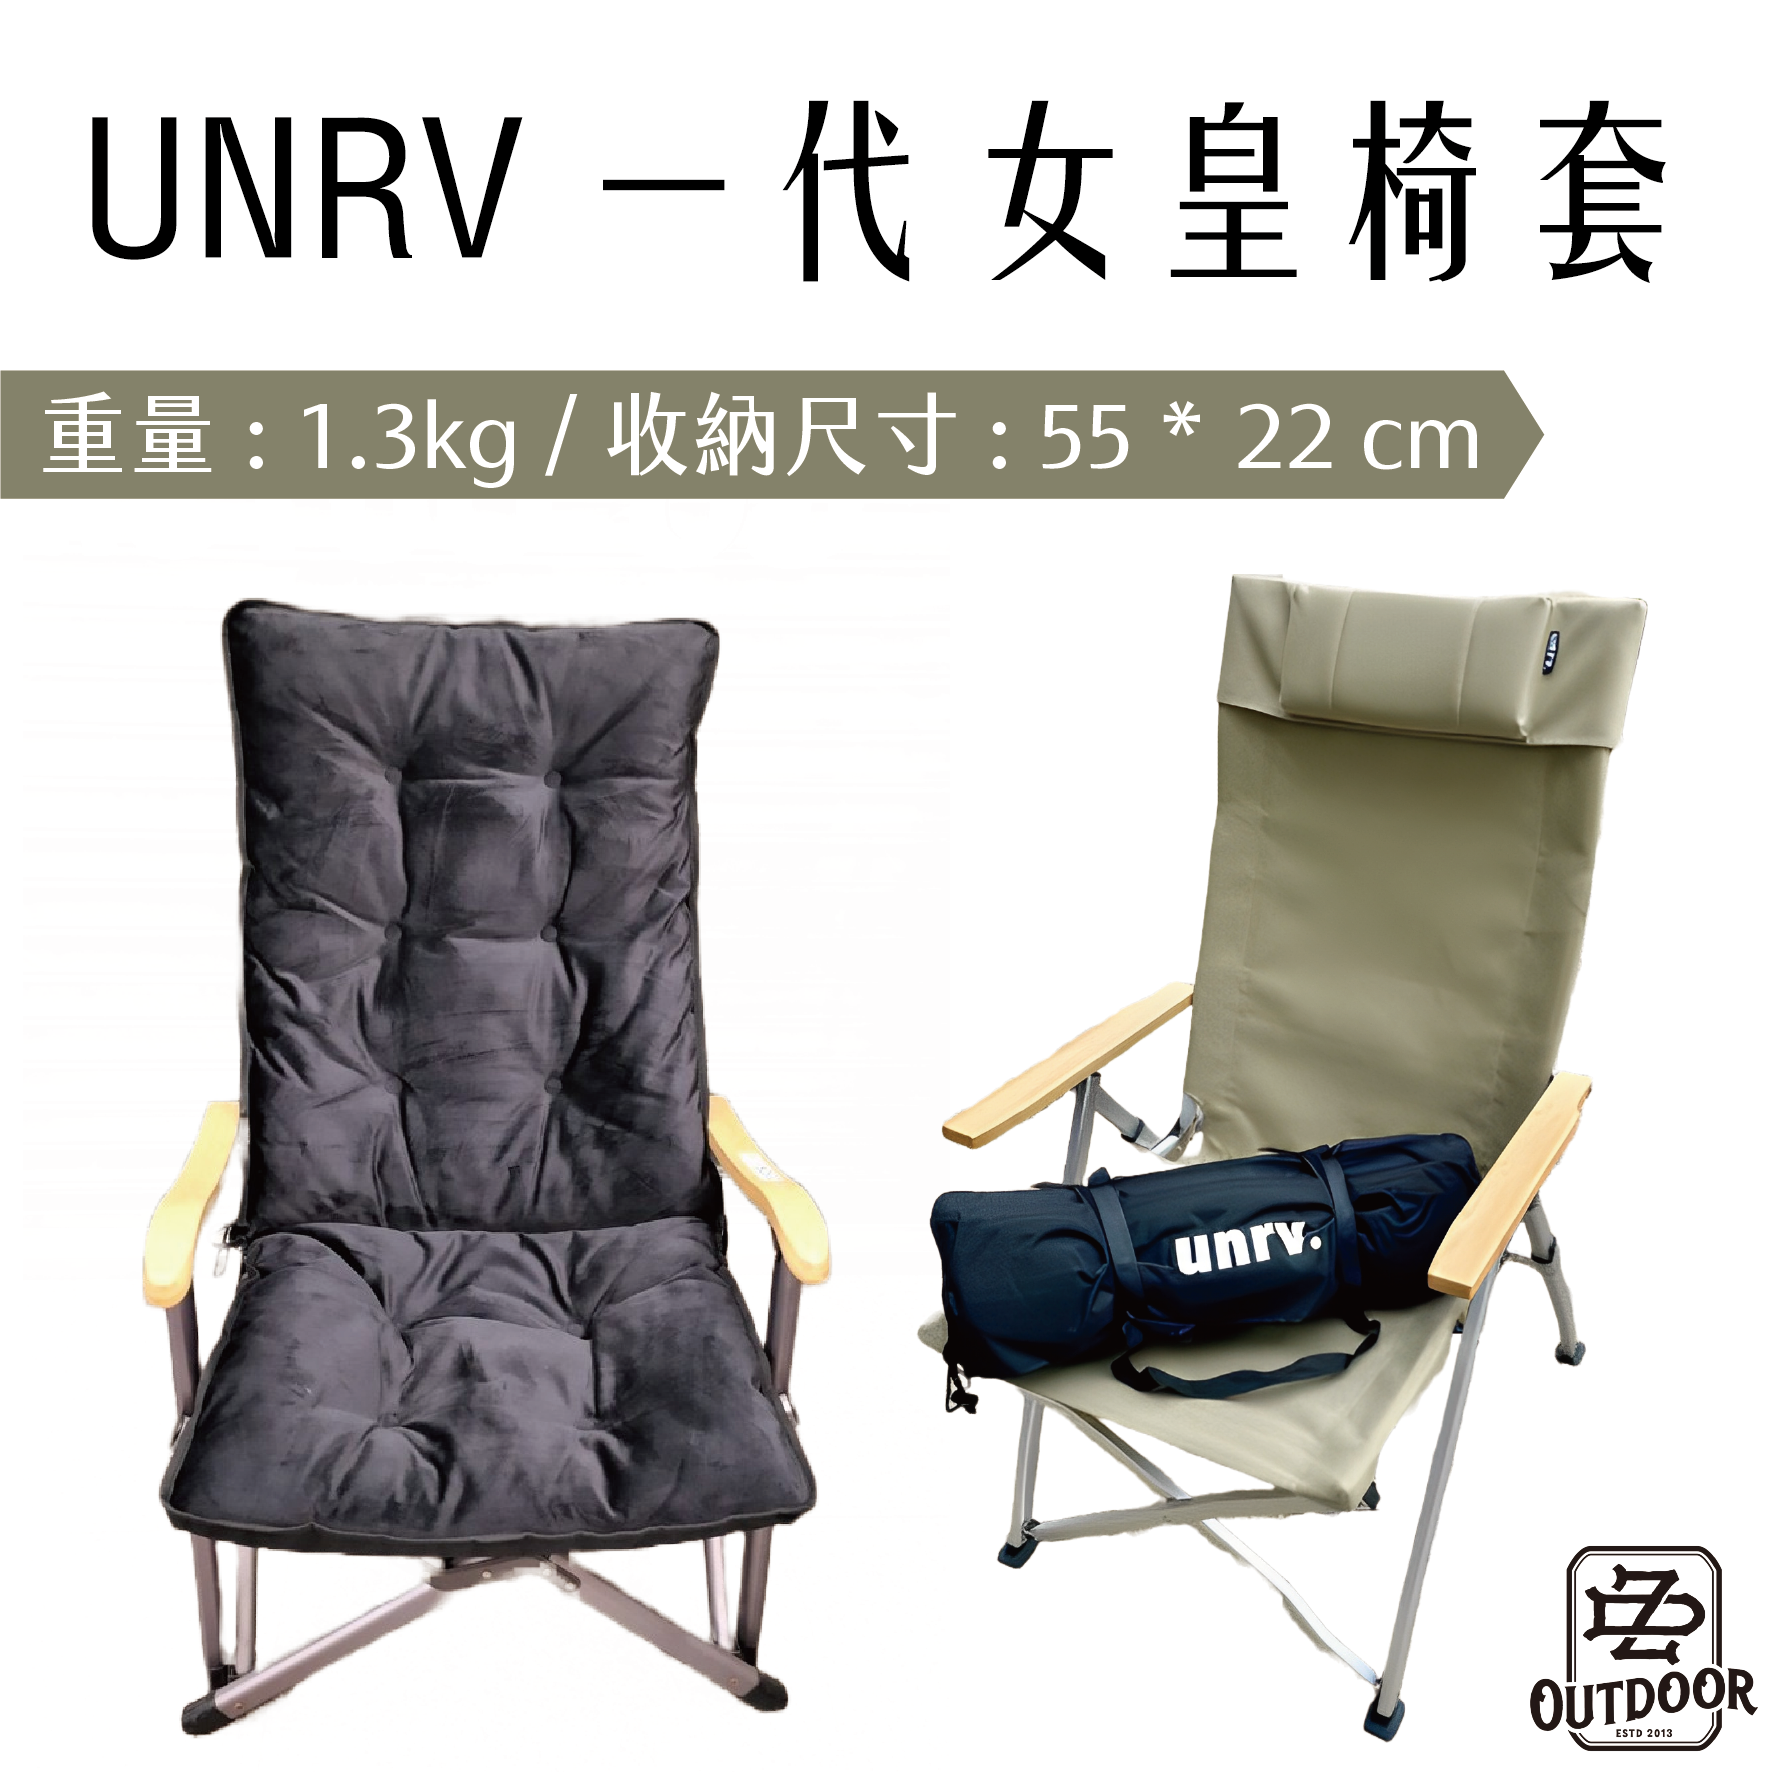 UNRV 一代女皇 黑色 椅套 頭等艙 露營椅 可收納【ZD Outdoor】椅套 雪花絨 舒適 保暖